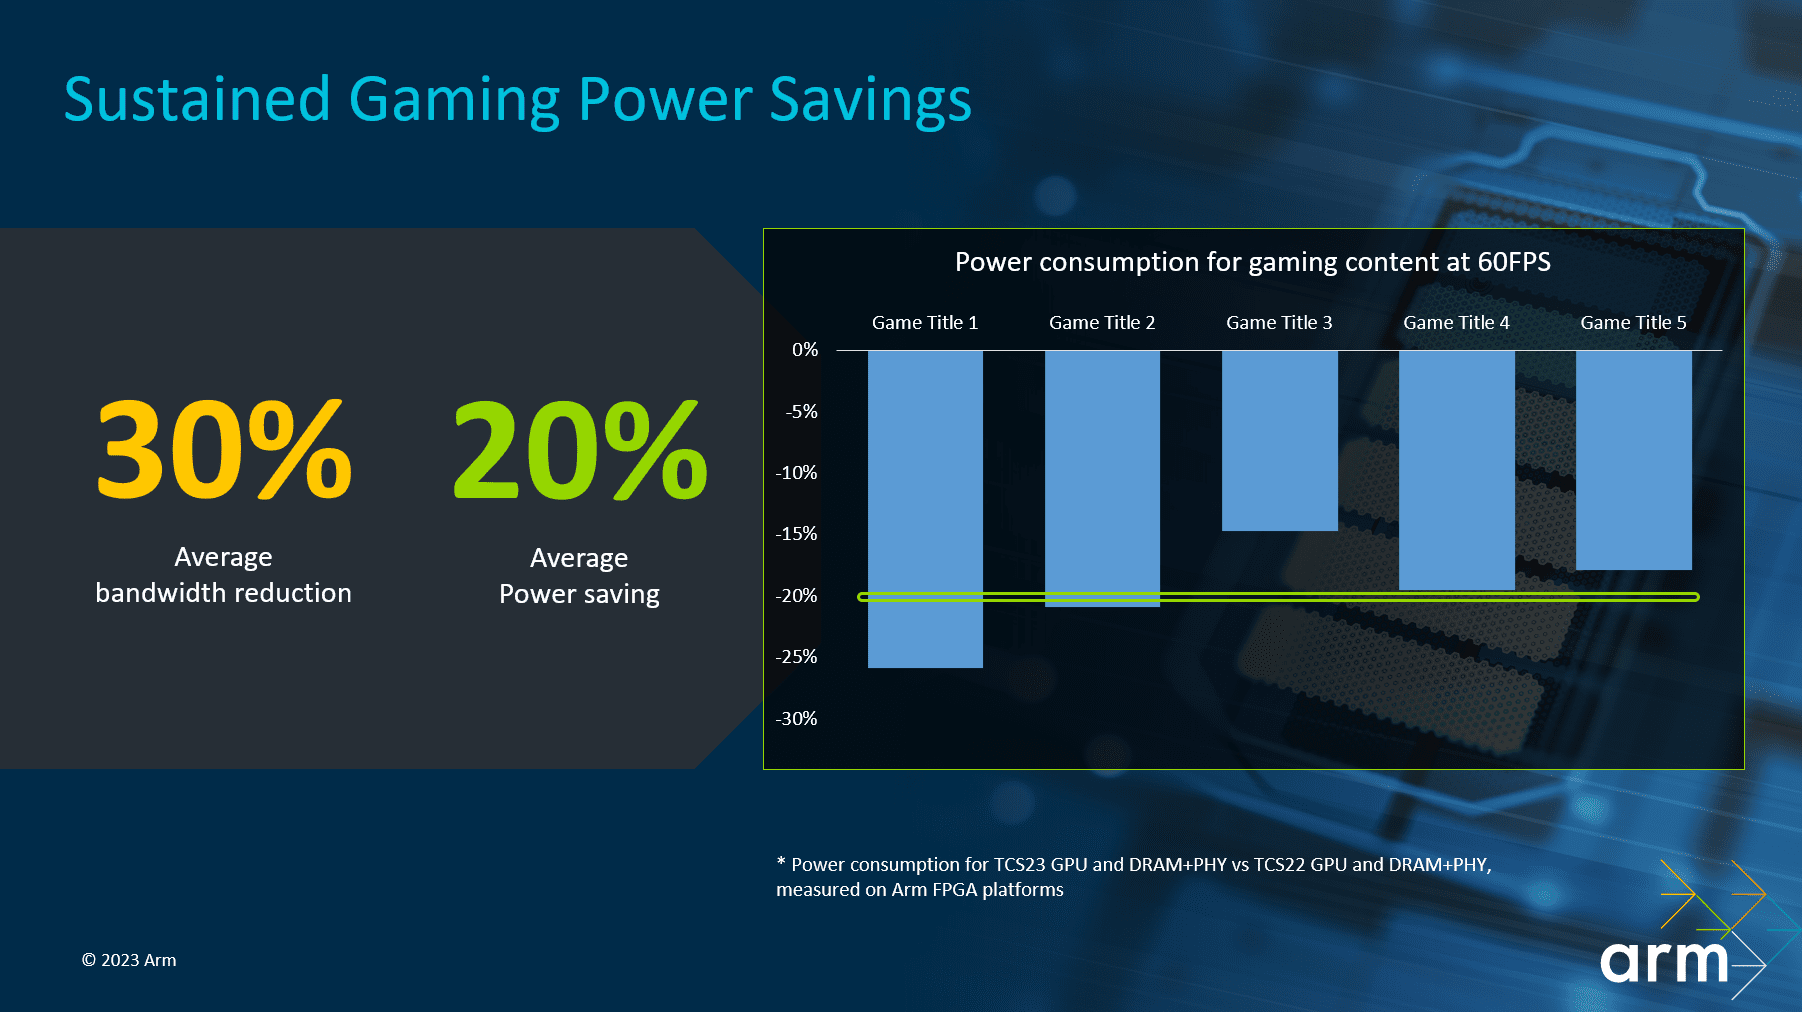 Sustained gaming power savings